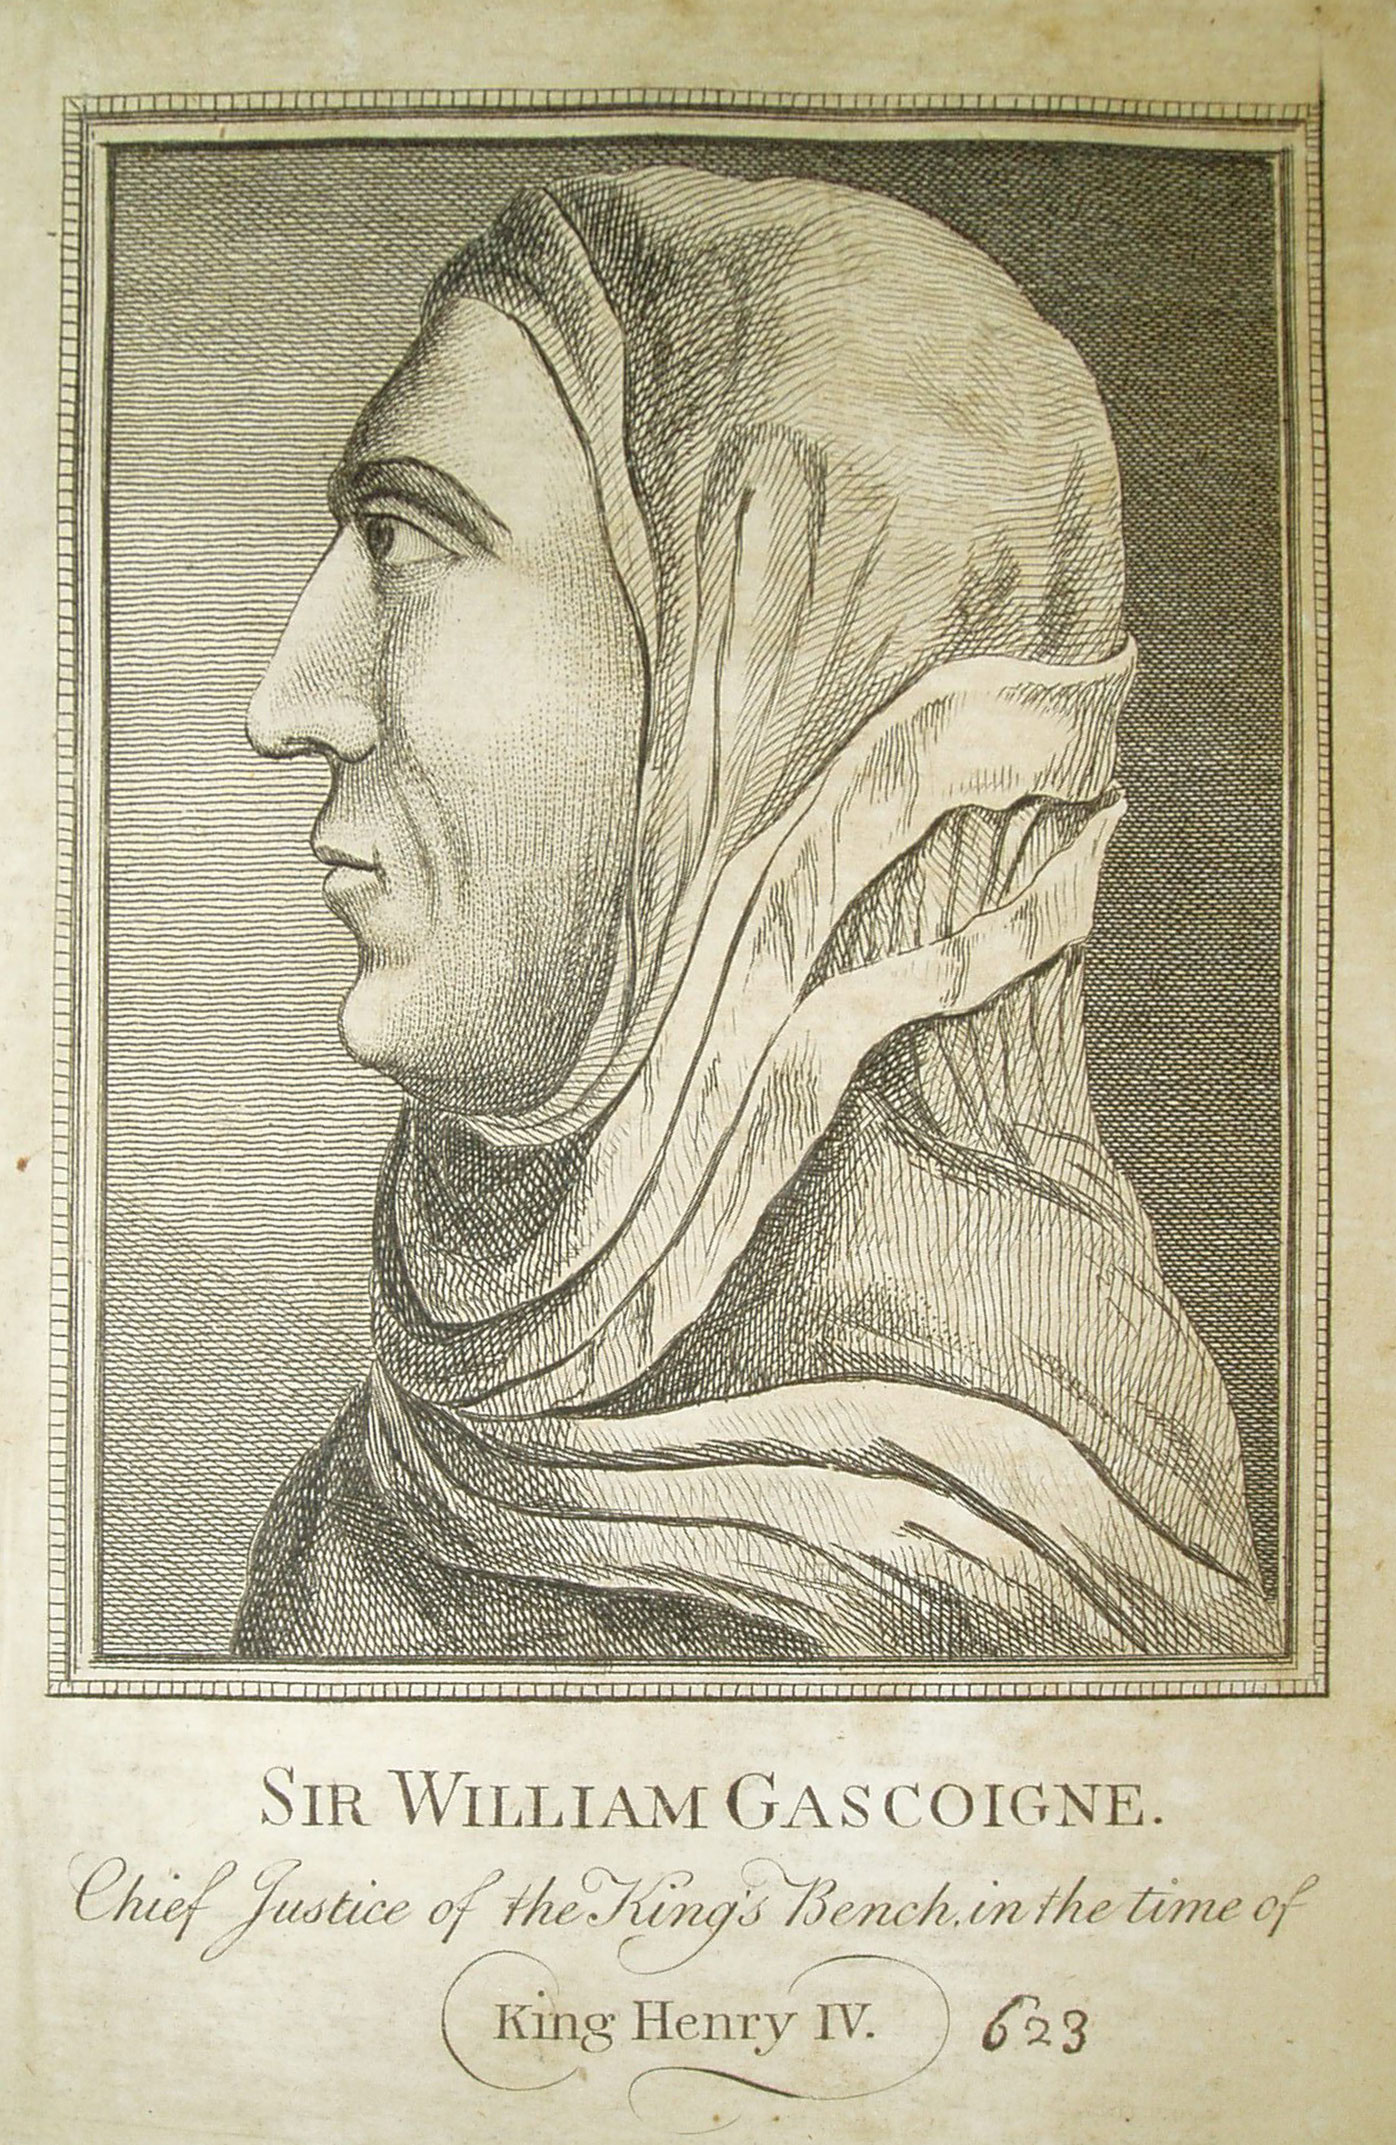 An illustration of Sir William Gascoigne